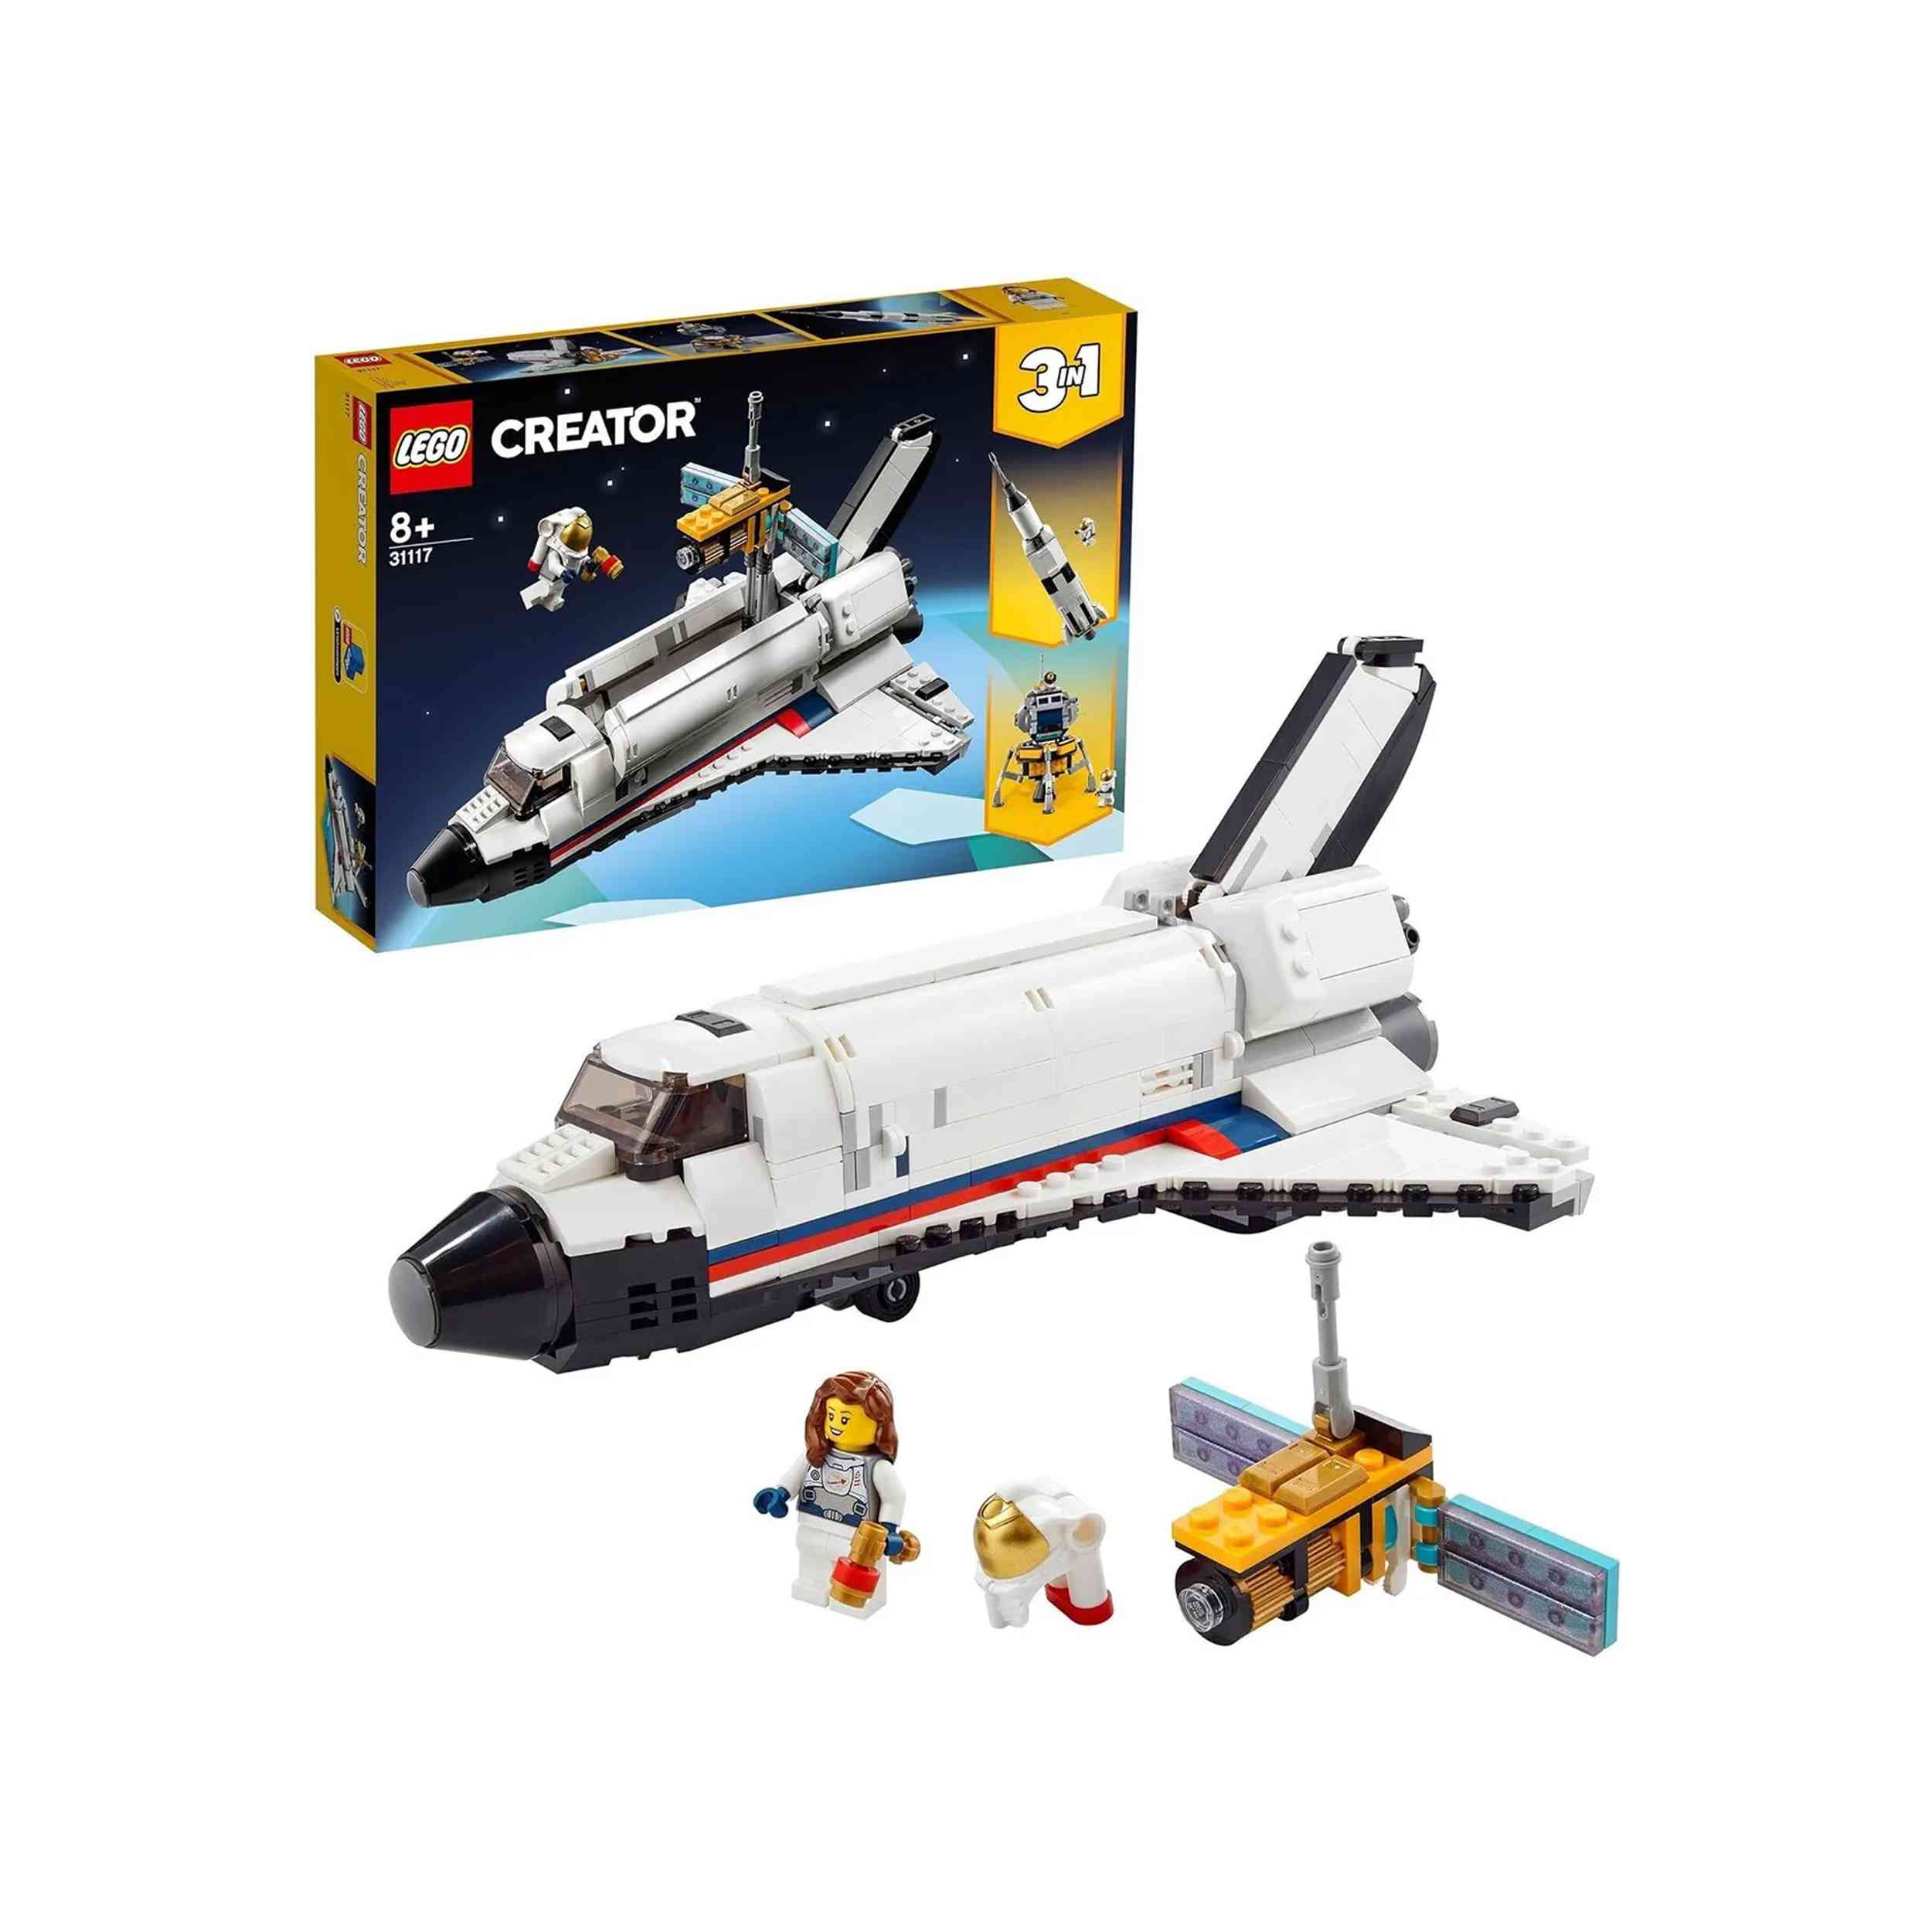 Lego Creator - Space Shuttle